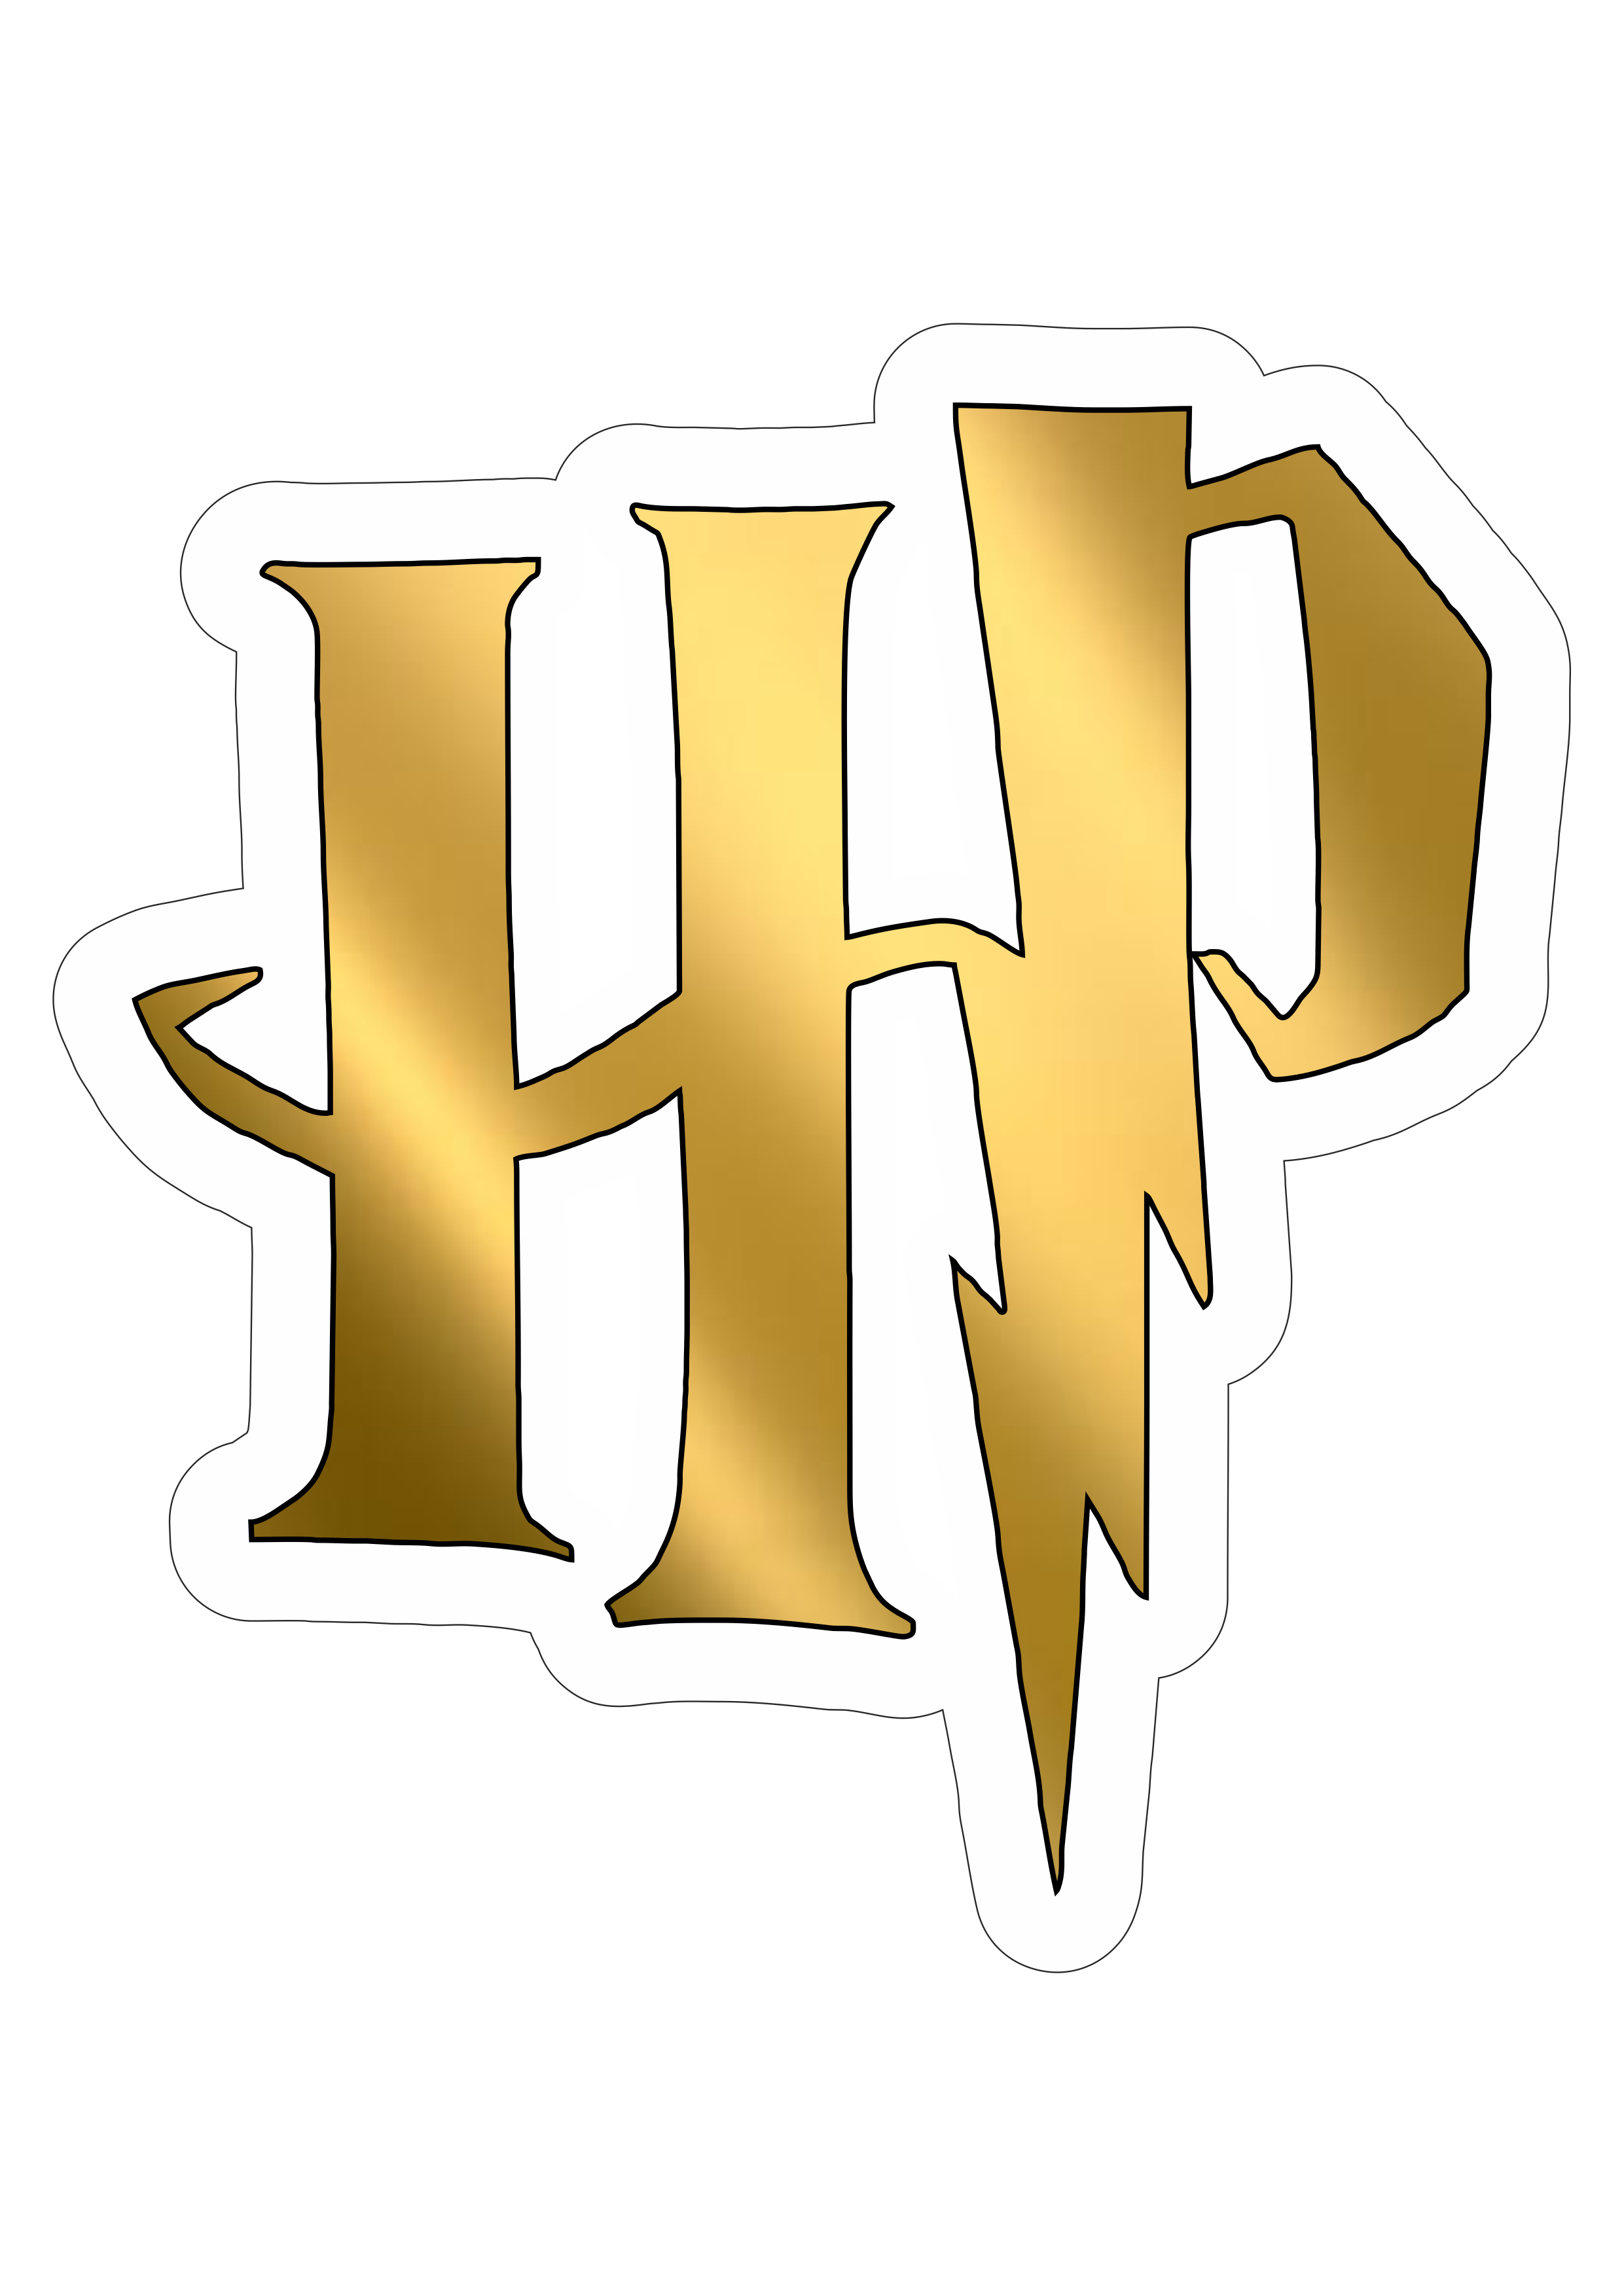 Harry Potter HP Logo by artbyjoewinkler on DeviantArt